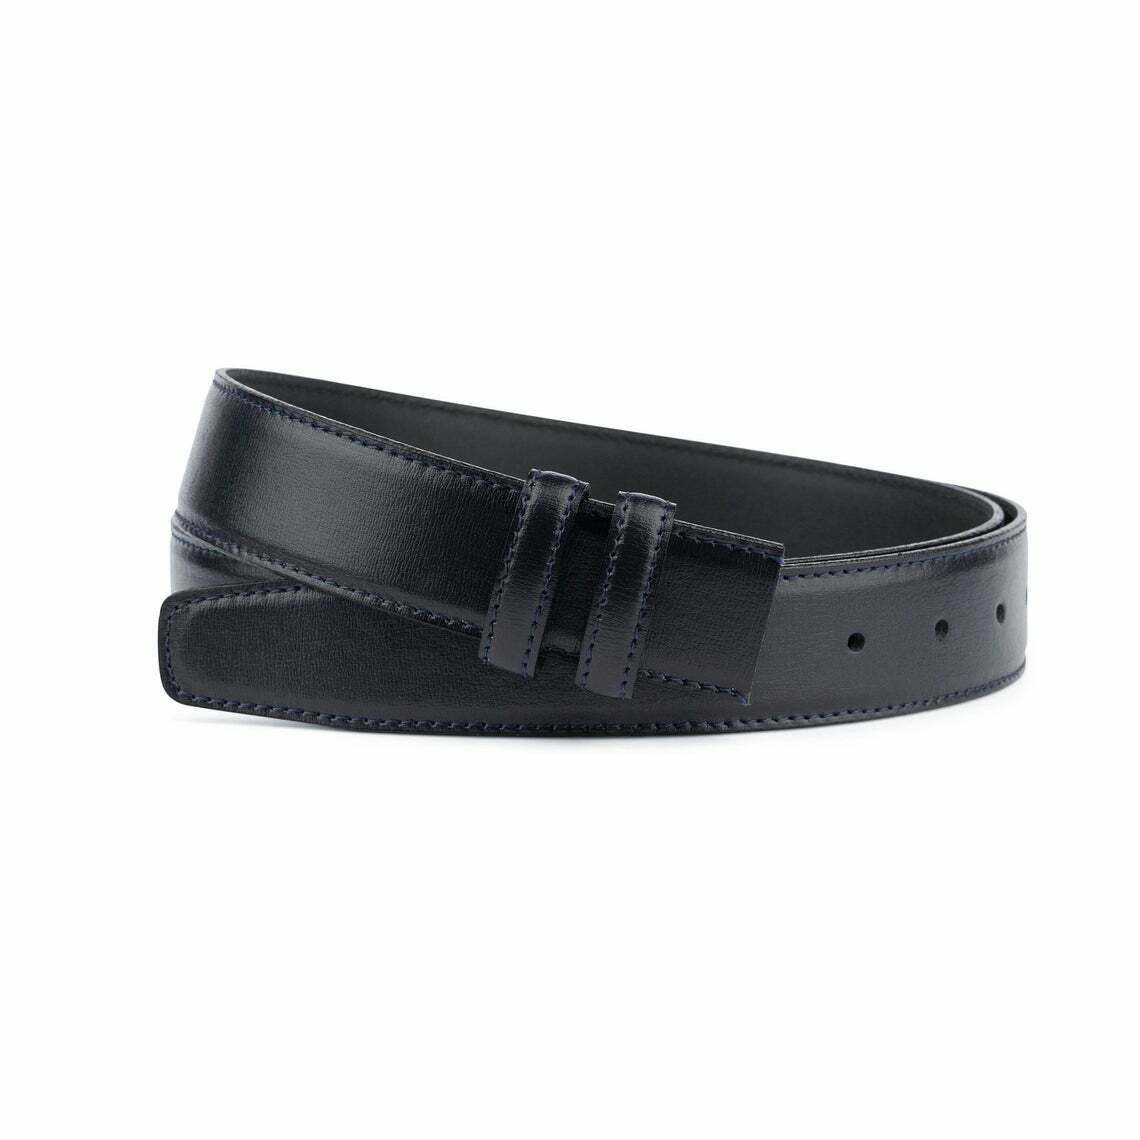 Dark Blue Belt No Buckle Stitched Genuine Leather For Montblanc Belts 35mm